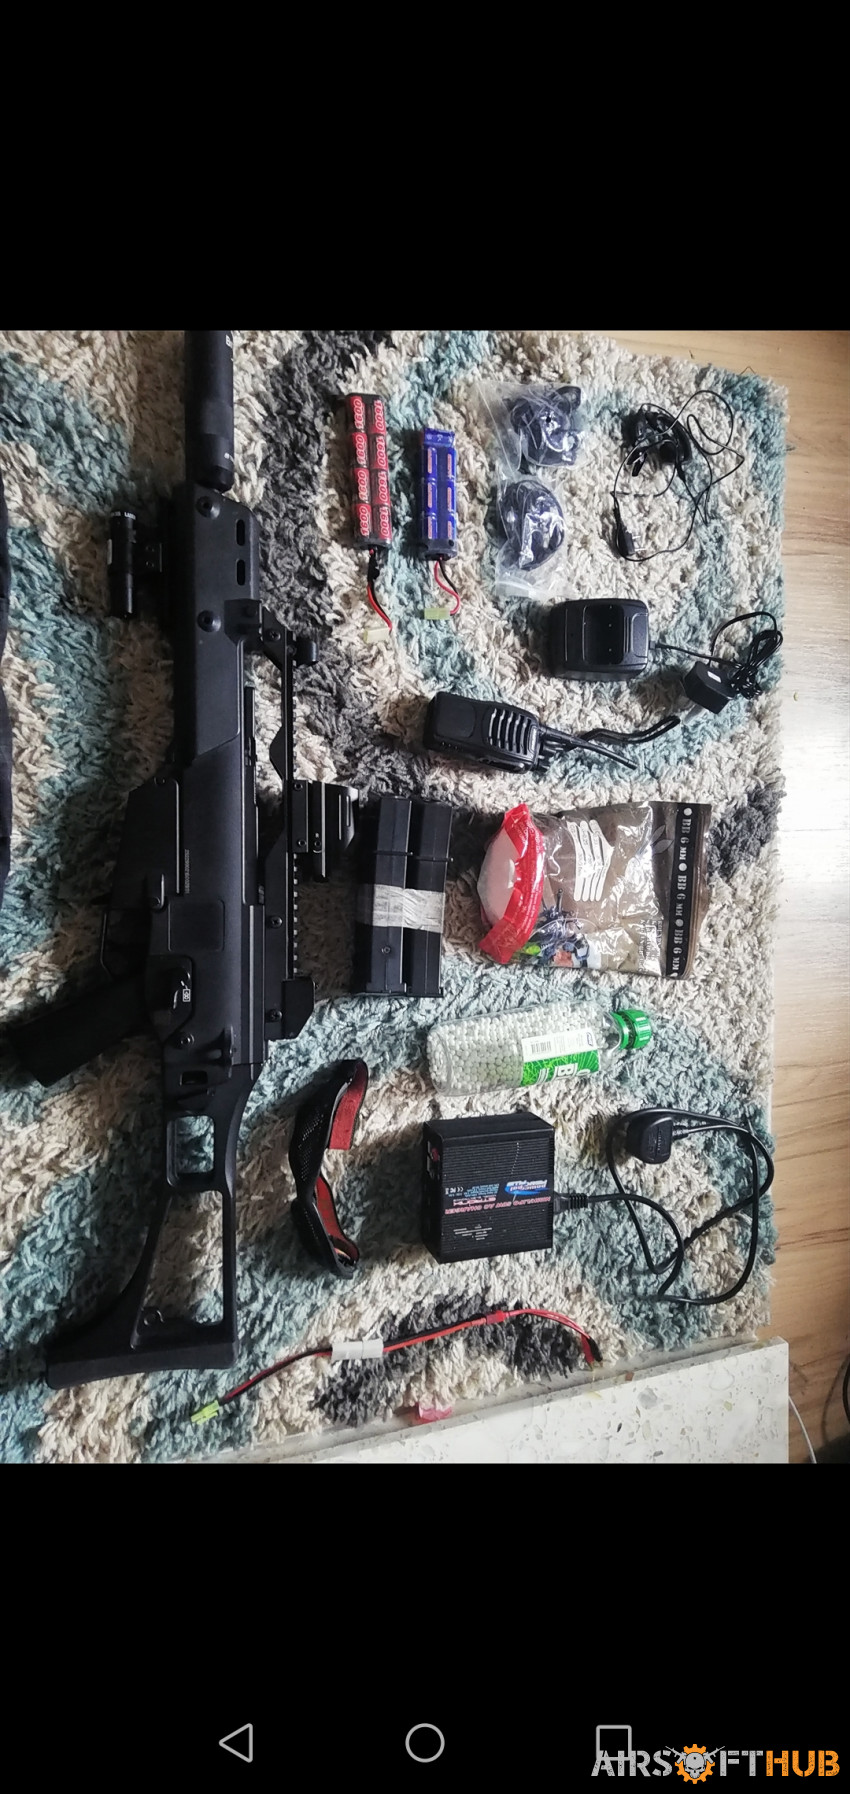 G36C AIRSOFT GUN AND FULL KIT - Used airsoft equipment